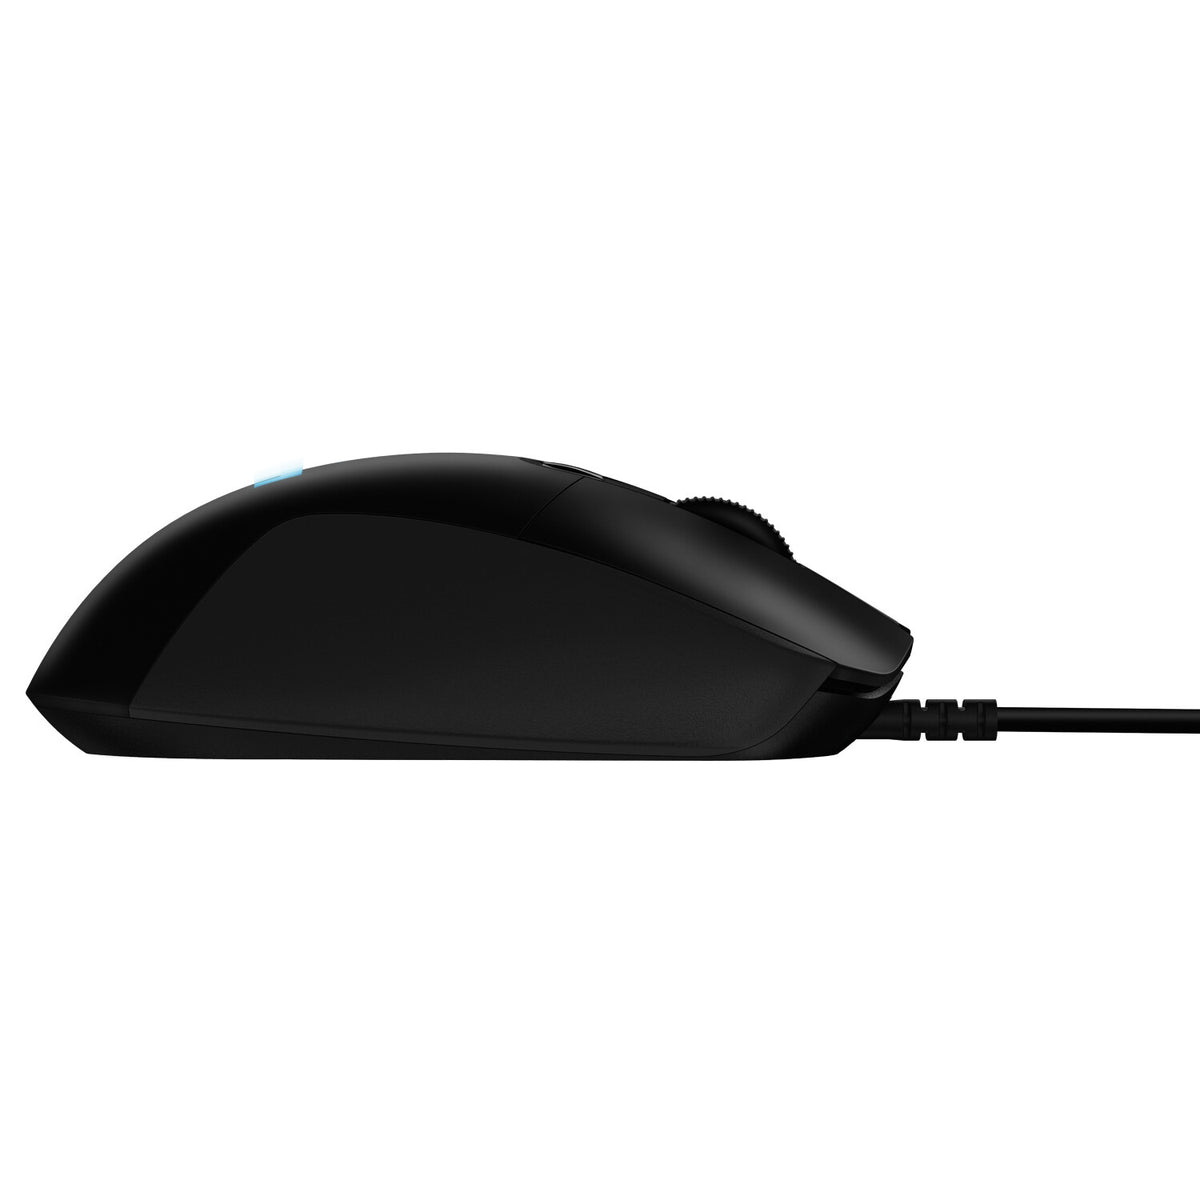 Logitech G - G403 HERO USB Type-A Optical Gaming Mouse - 25,600 DPI